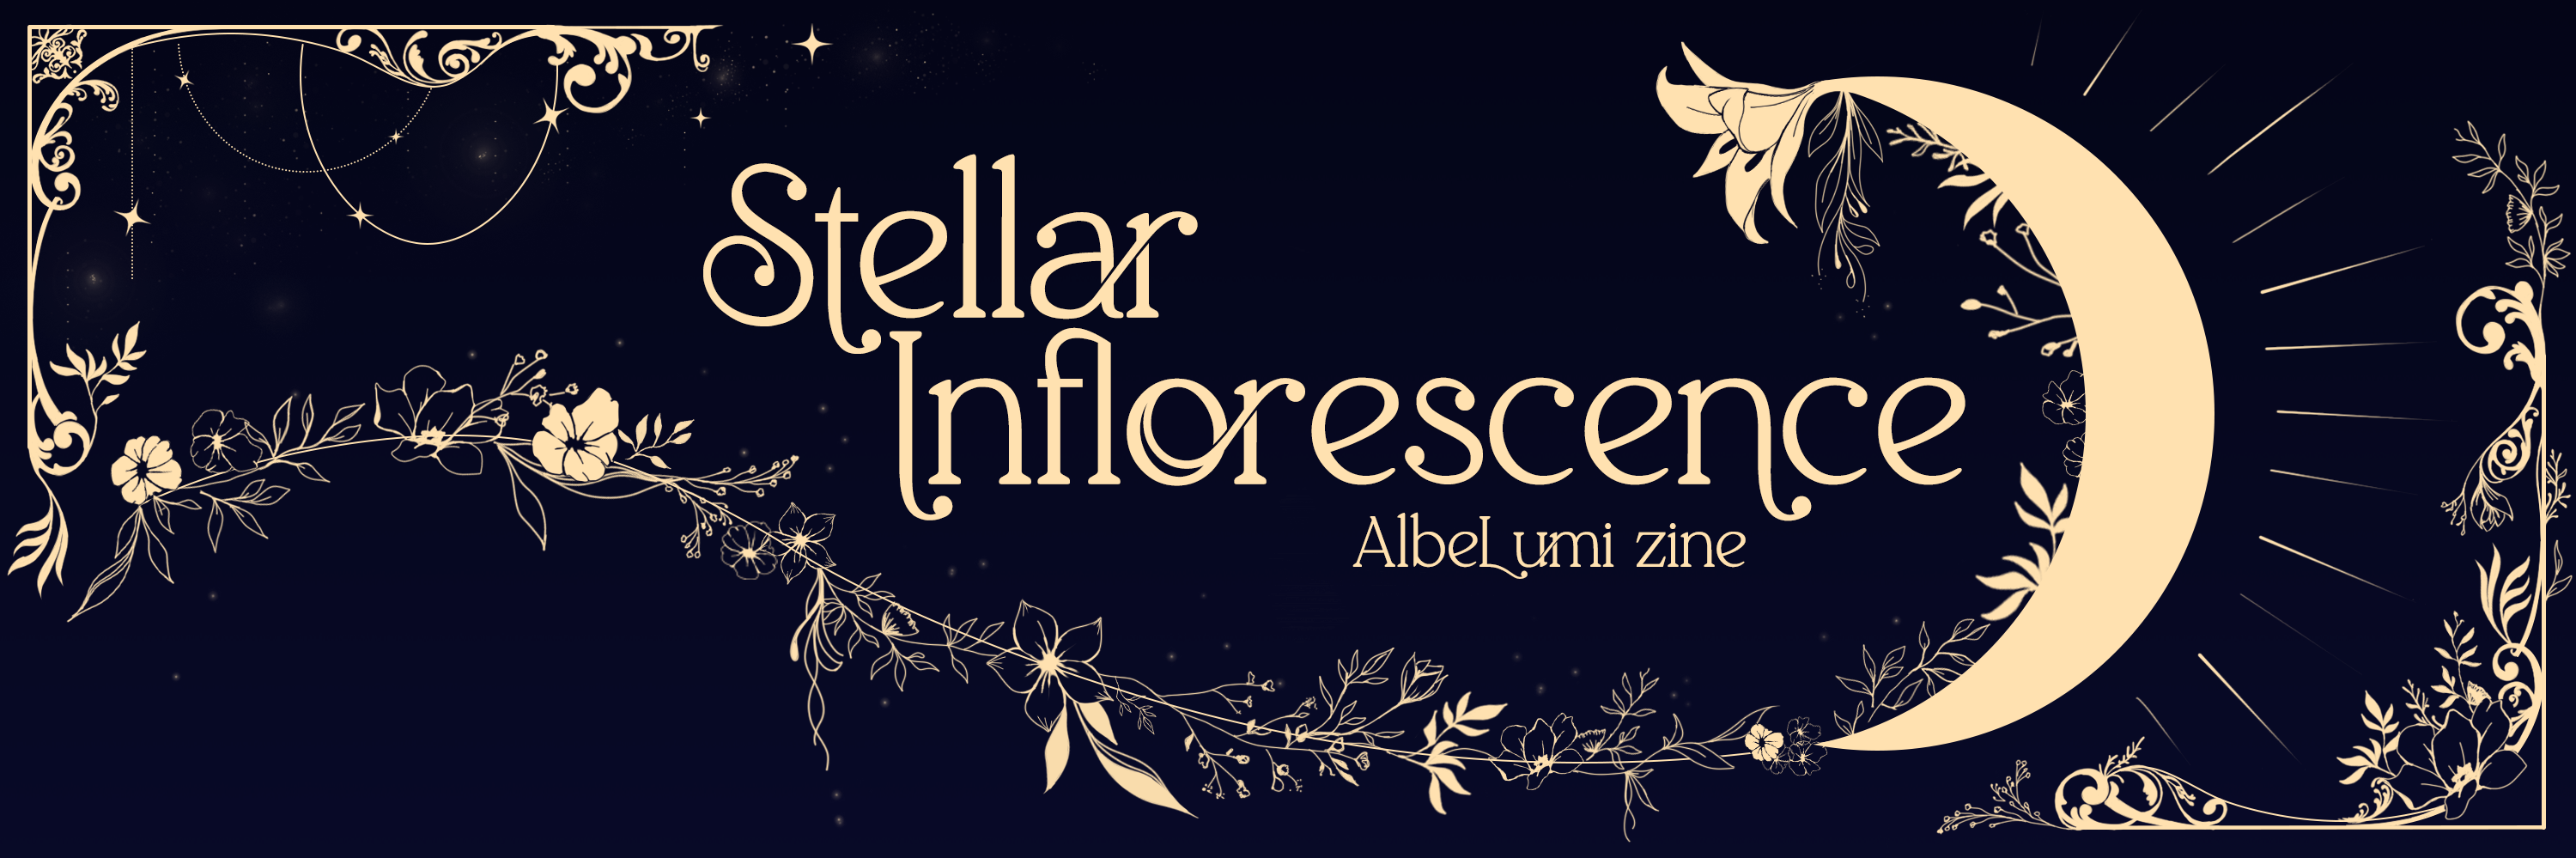 Stellar Inflorescence - An Albelumi Zine